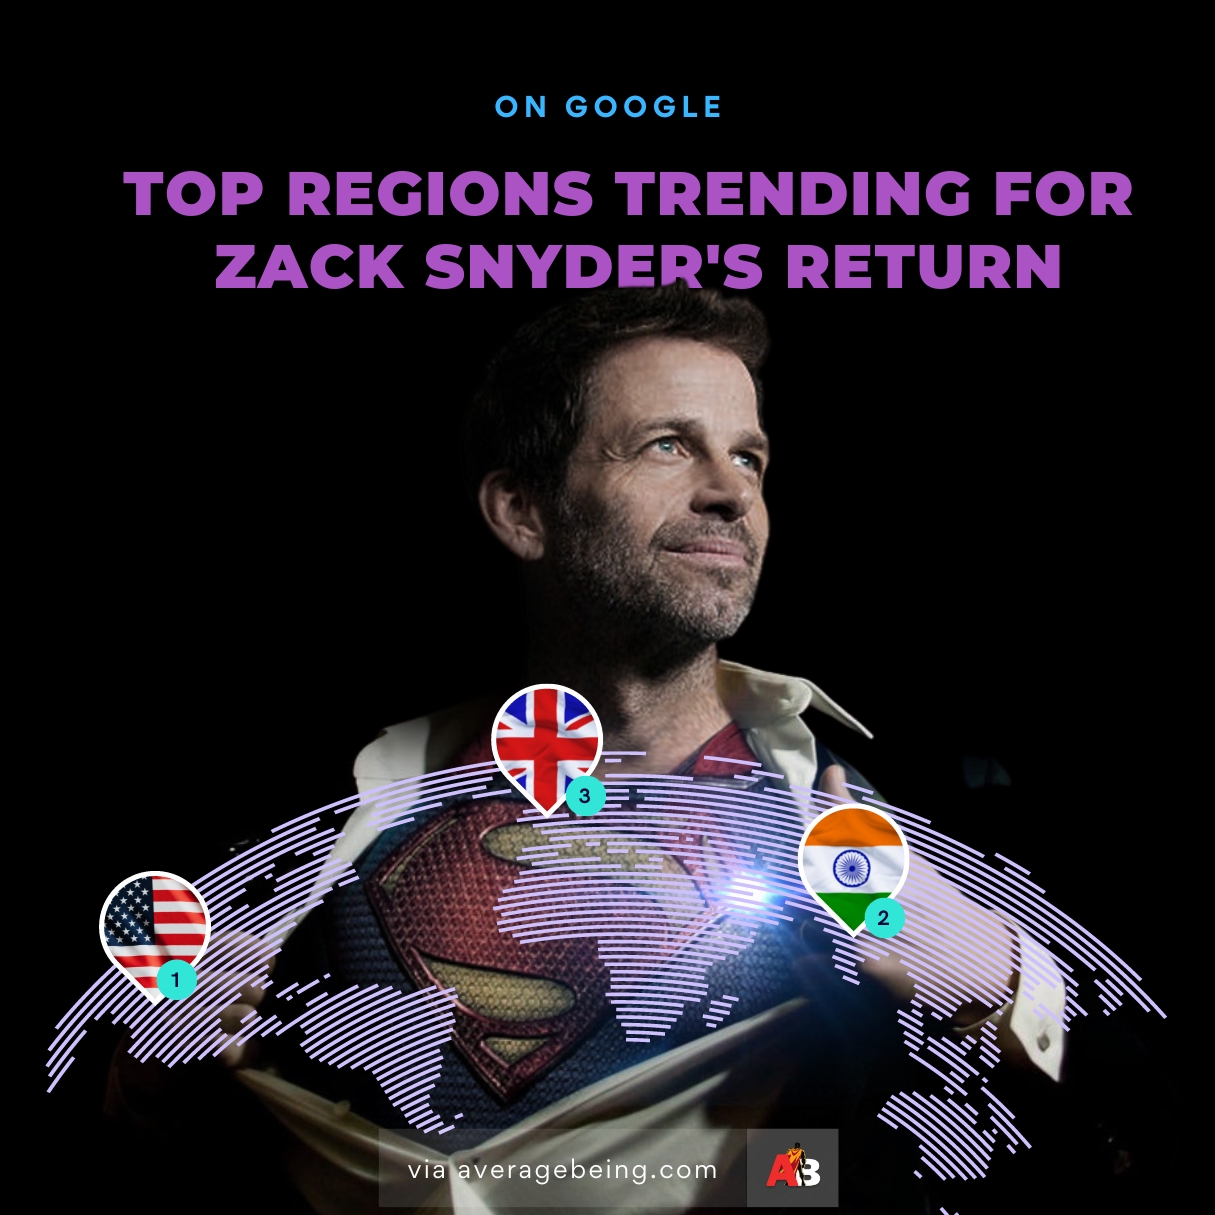 Top Regions Trending For Zack Snyder's Return by Averagebeing.com